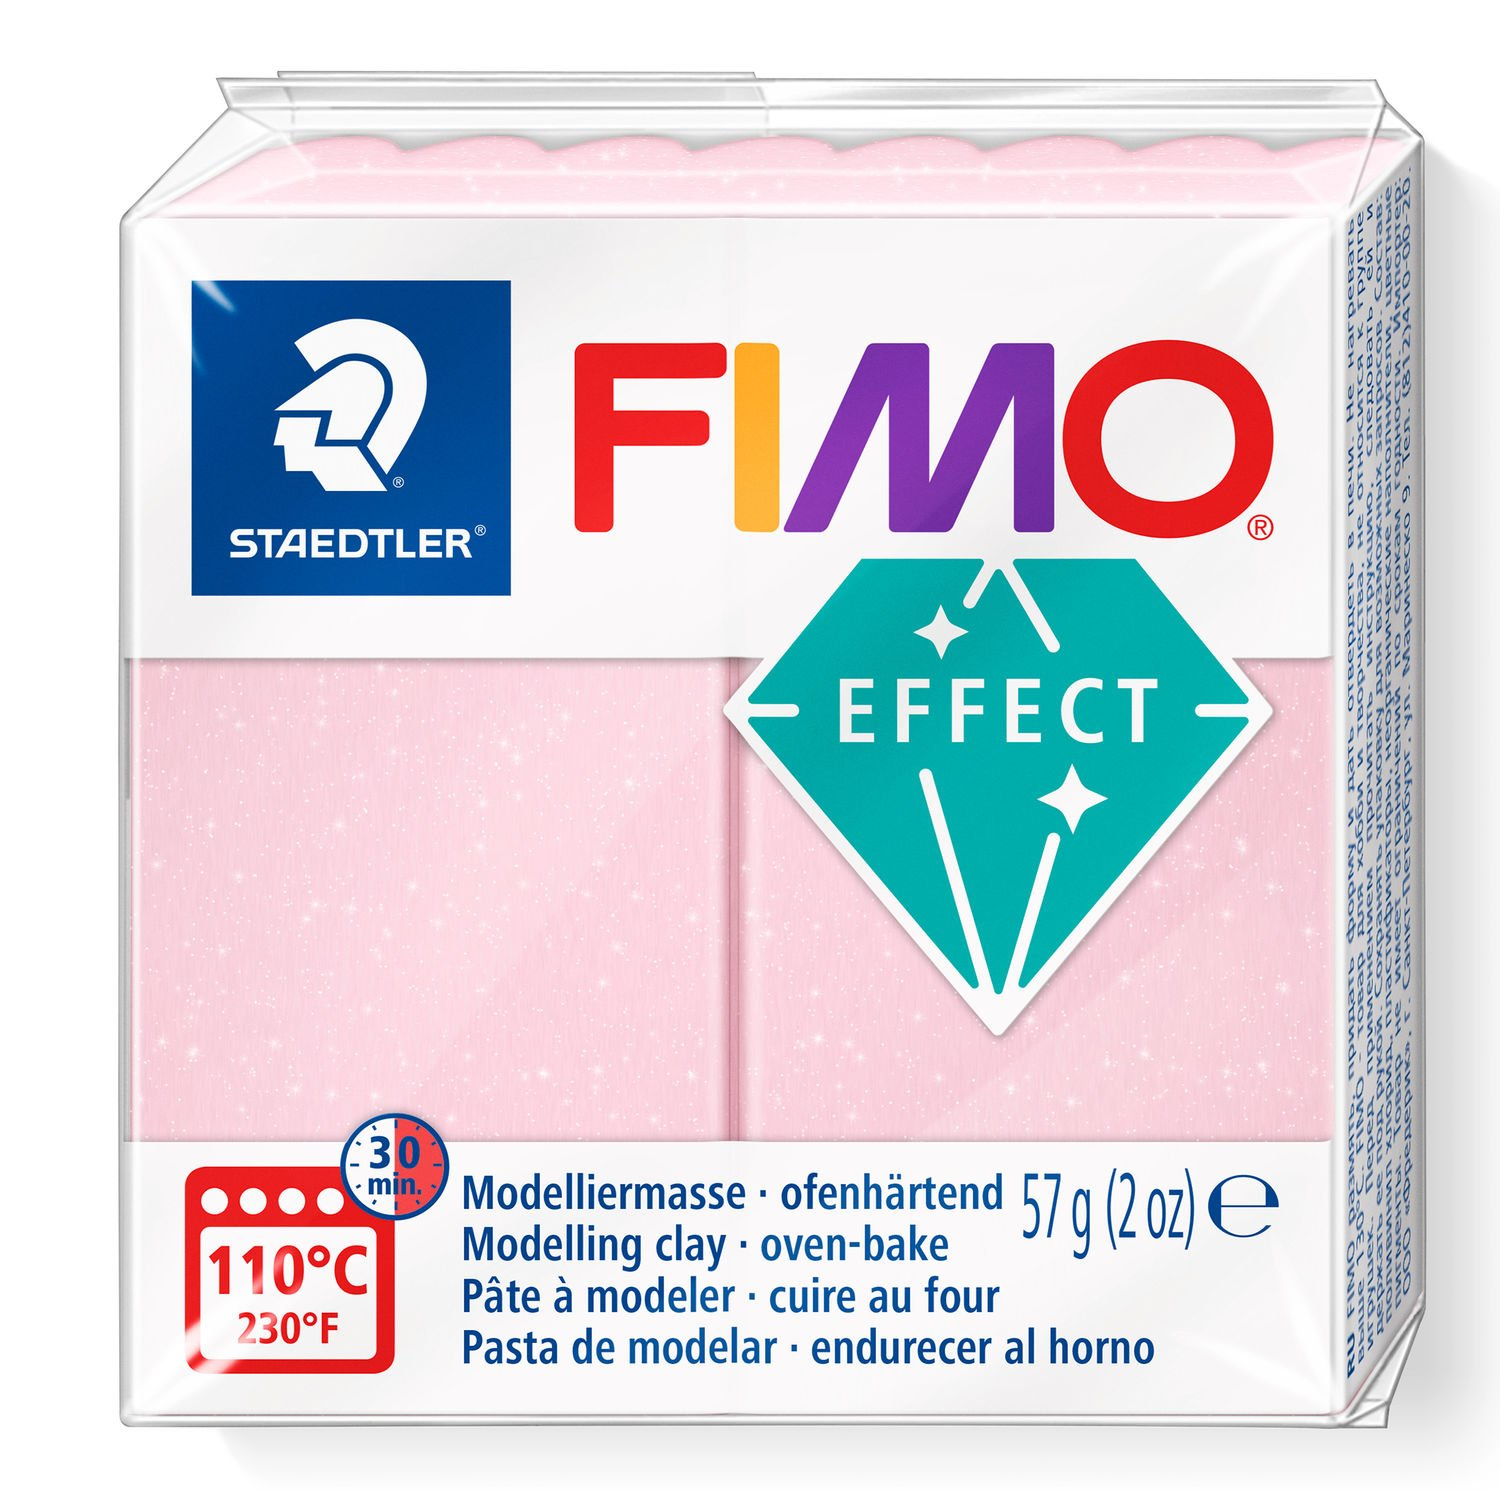 STAEDTLER FIMO 8020 - Knetmasse - Rose - Erwachsene - 1 Stück(e) - Gemstone rose quartz - 1 Farben